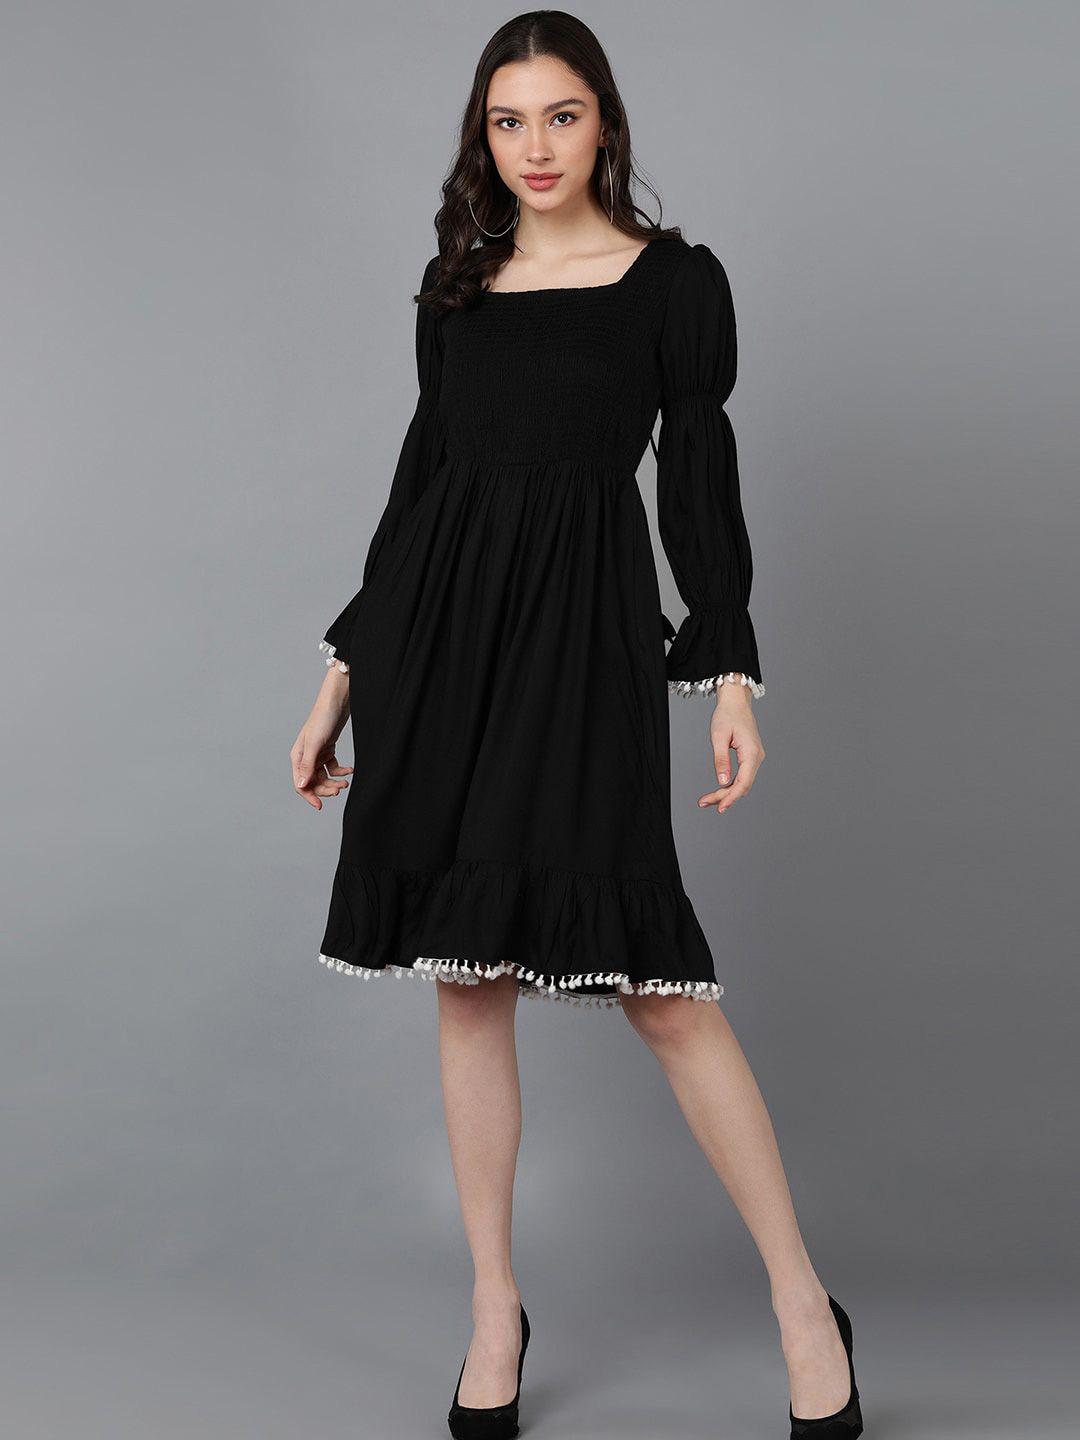 znx clothing black dress